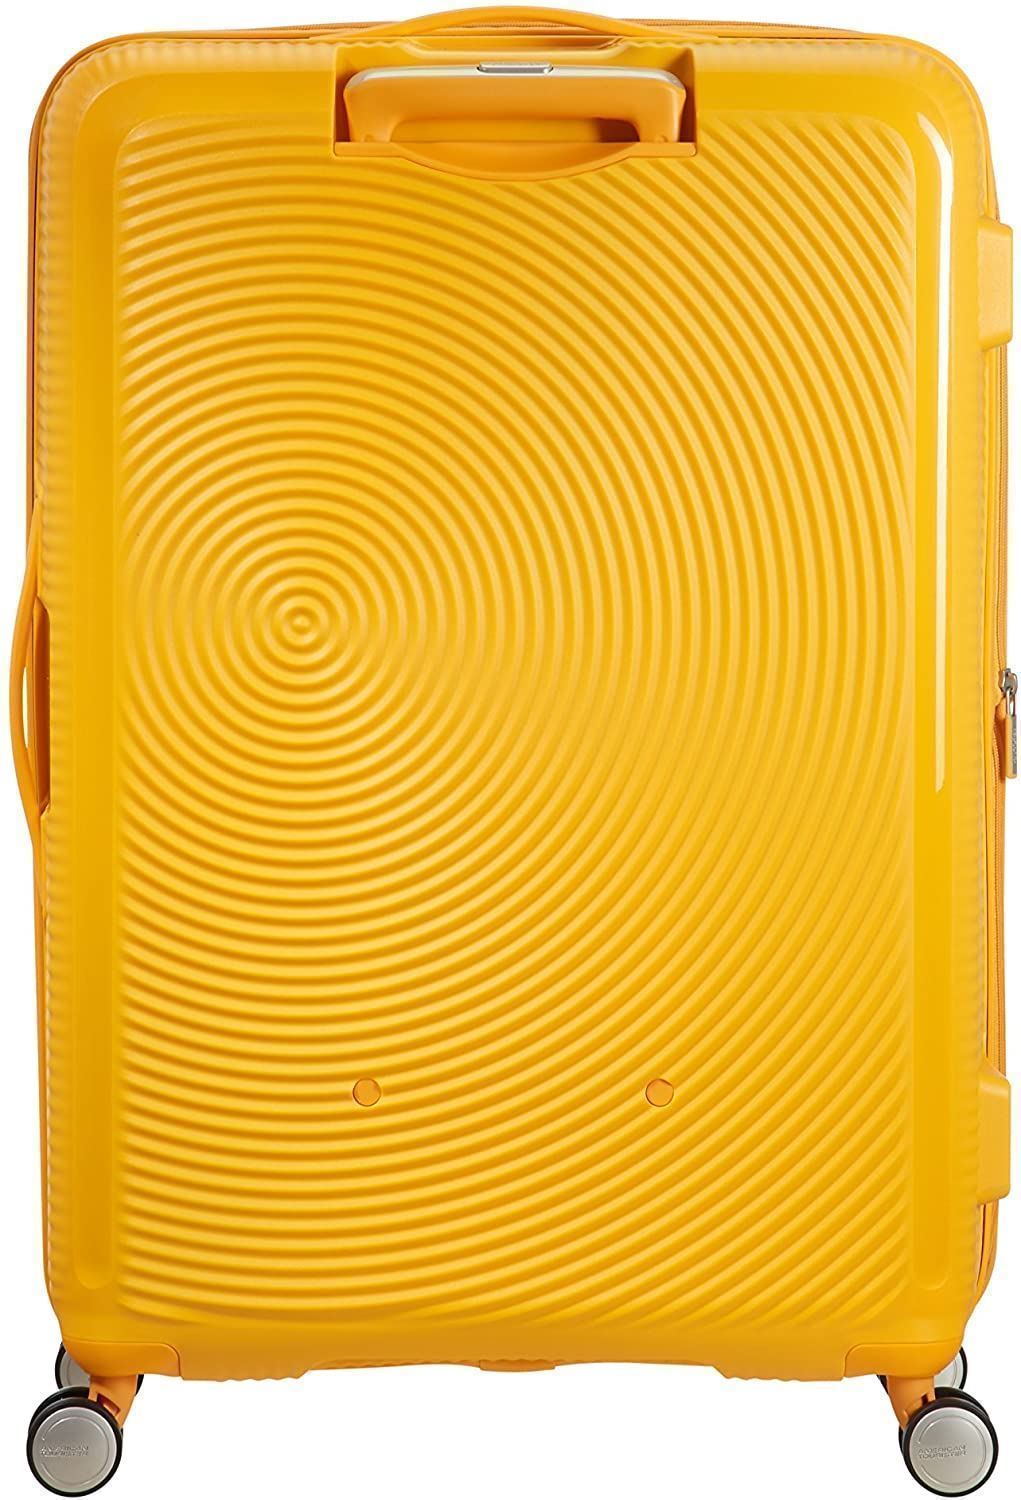 American Tourister Soundbox rigida grande expandible amarilla - Imagen 5